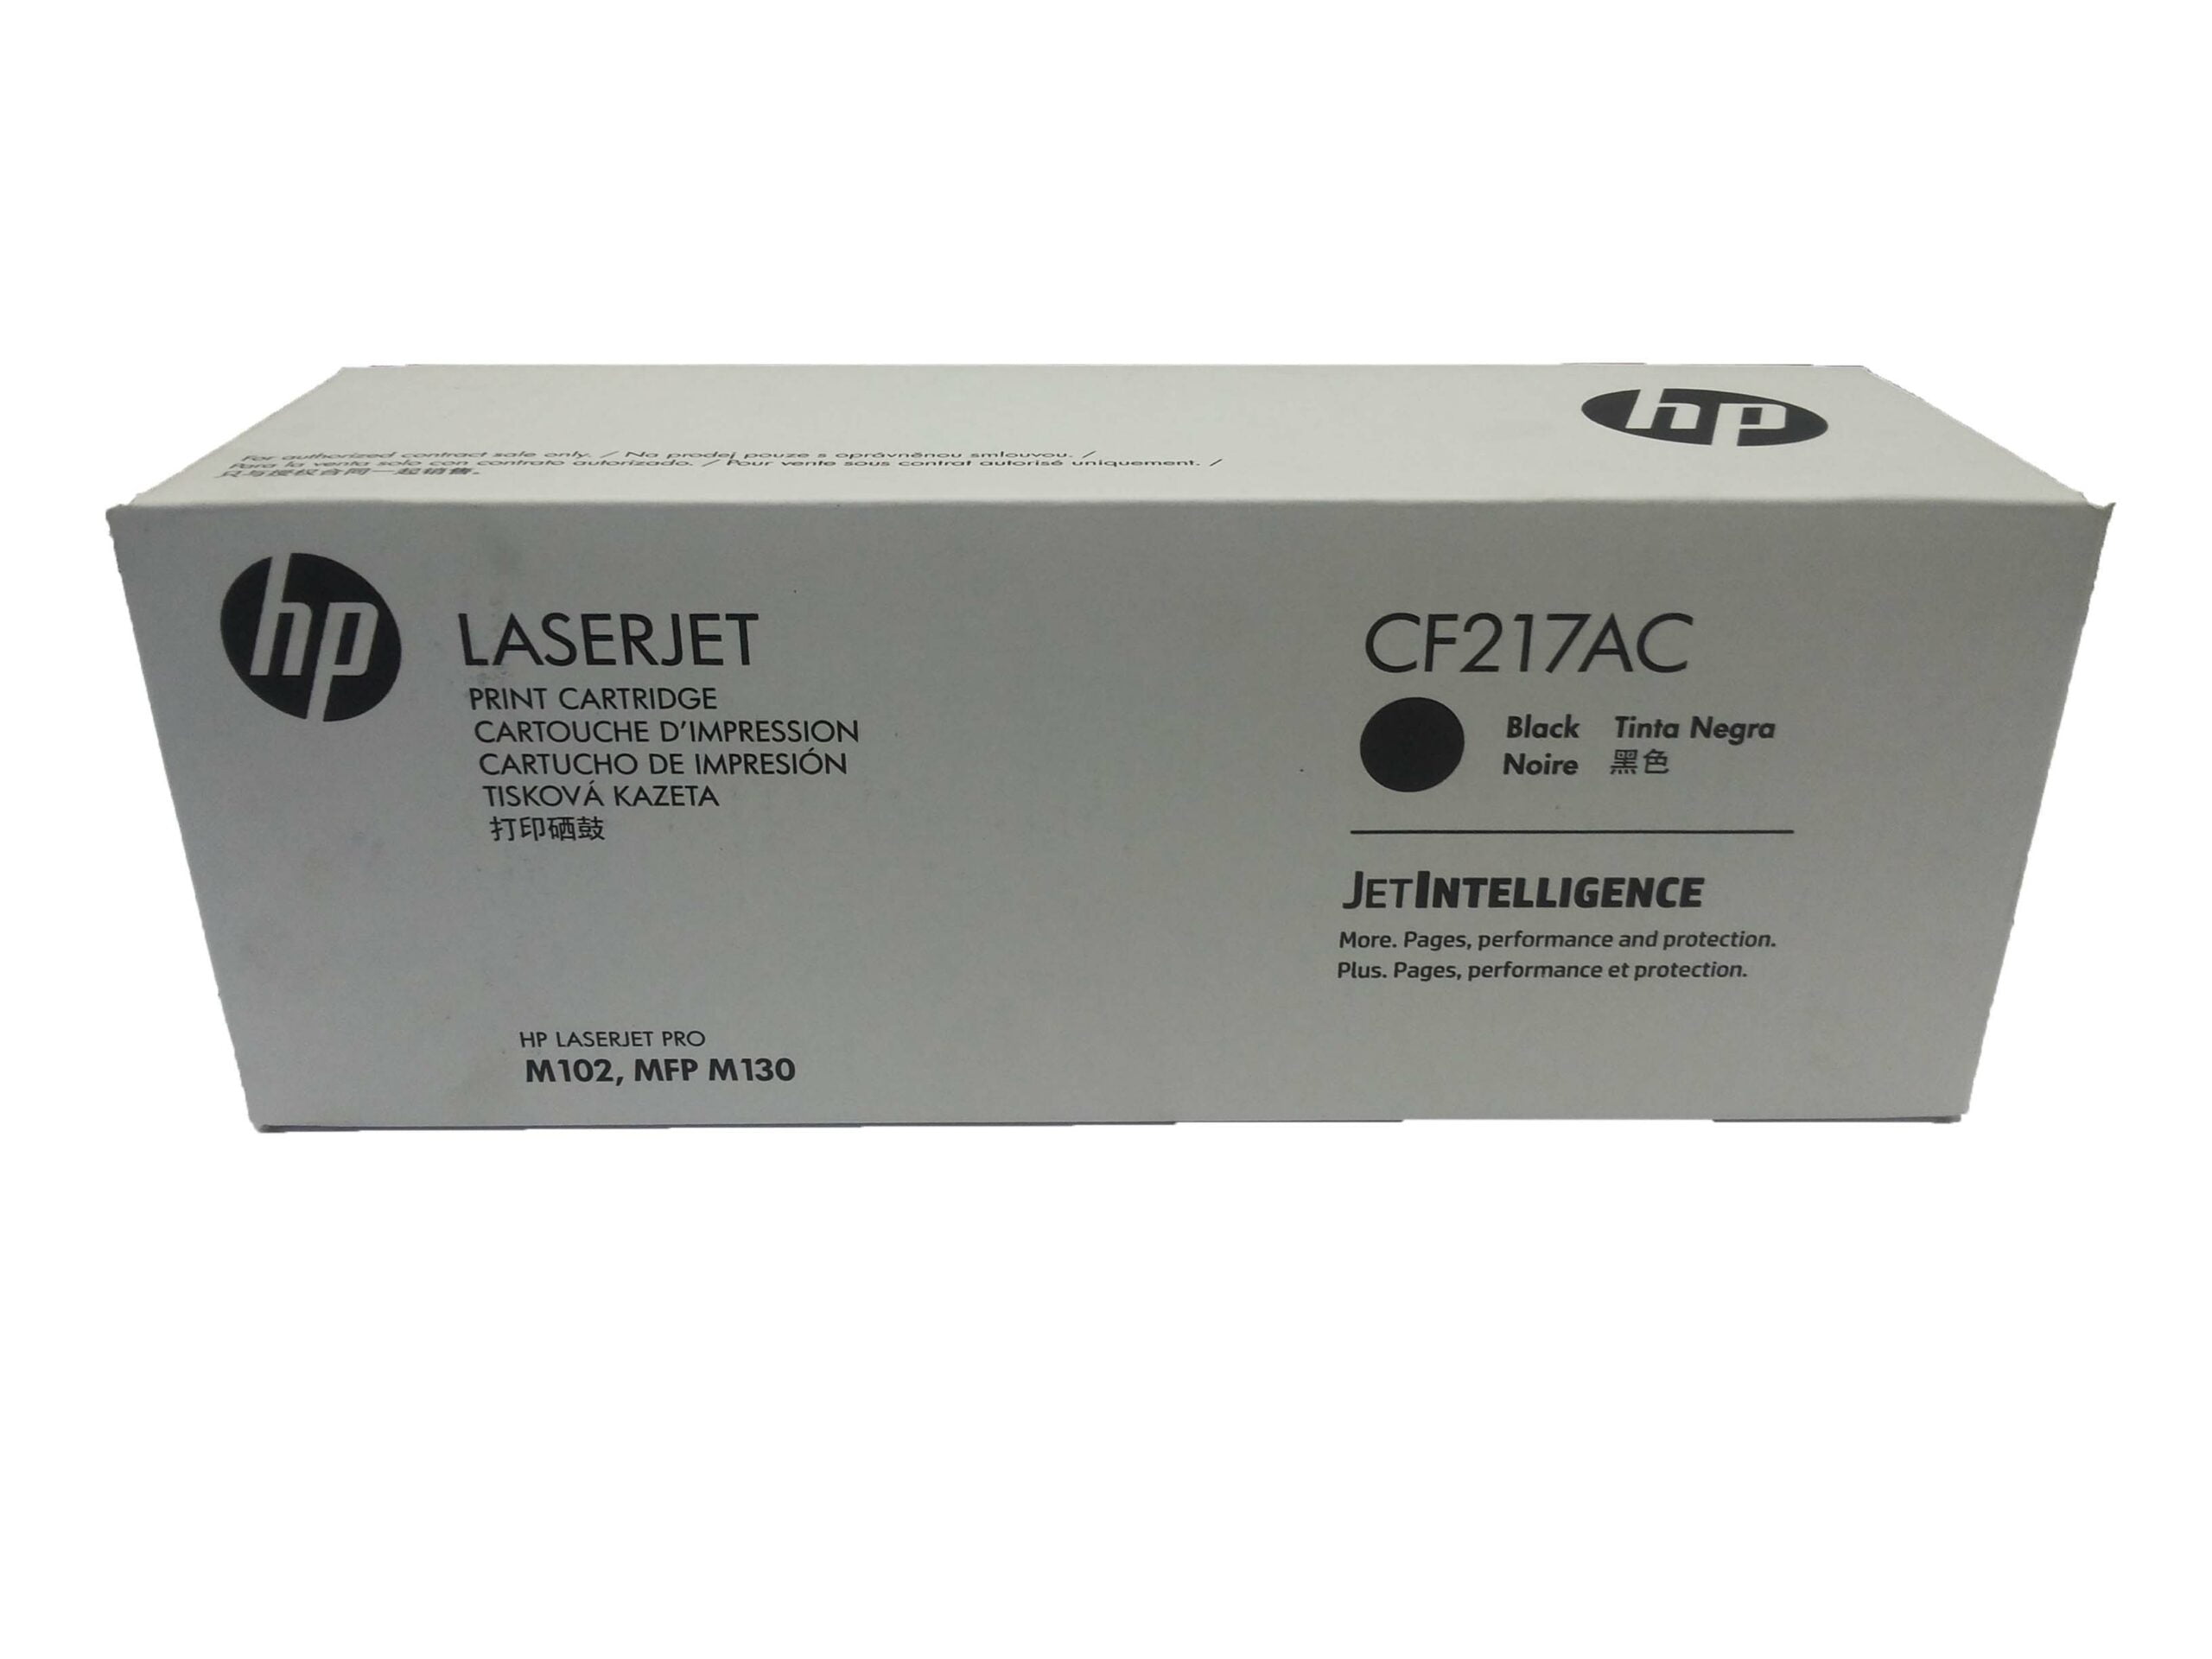 HP 17A Black Original laser Toner Cartridge CF217A for HP LaserJet Pro printers and MFP